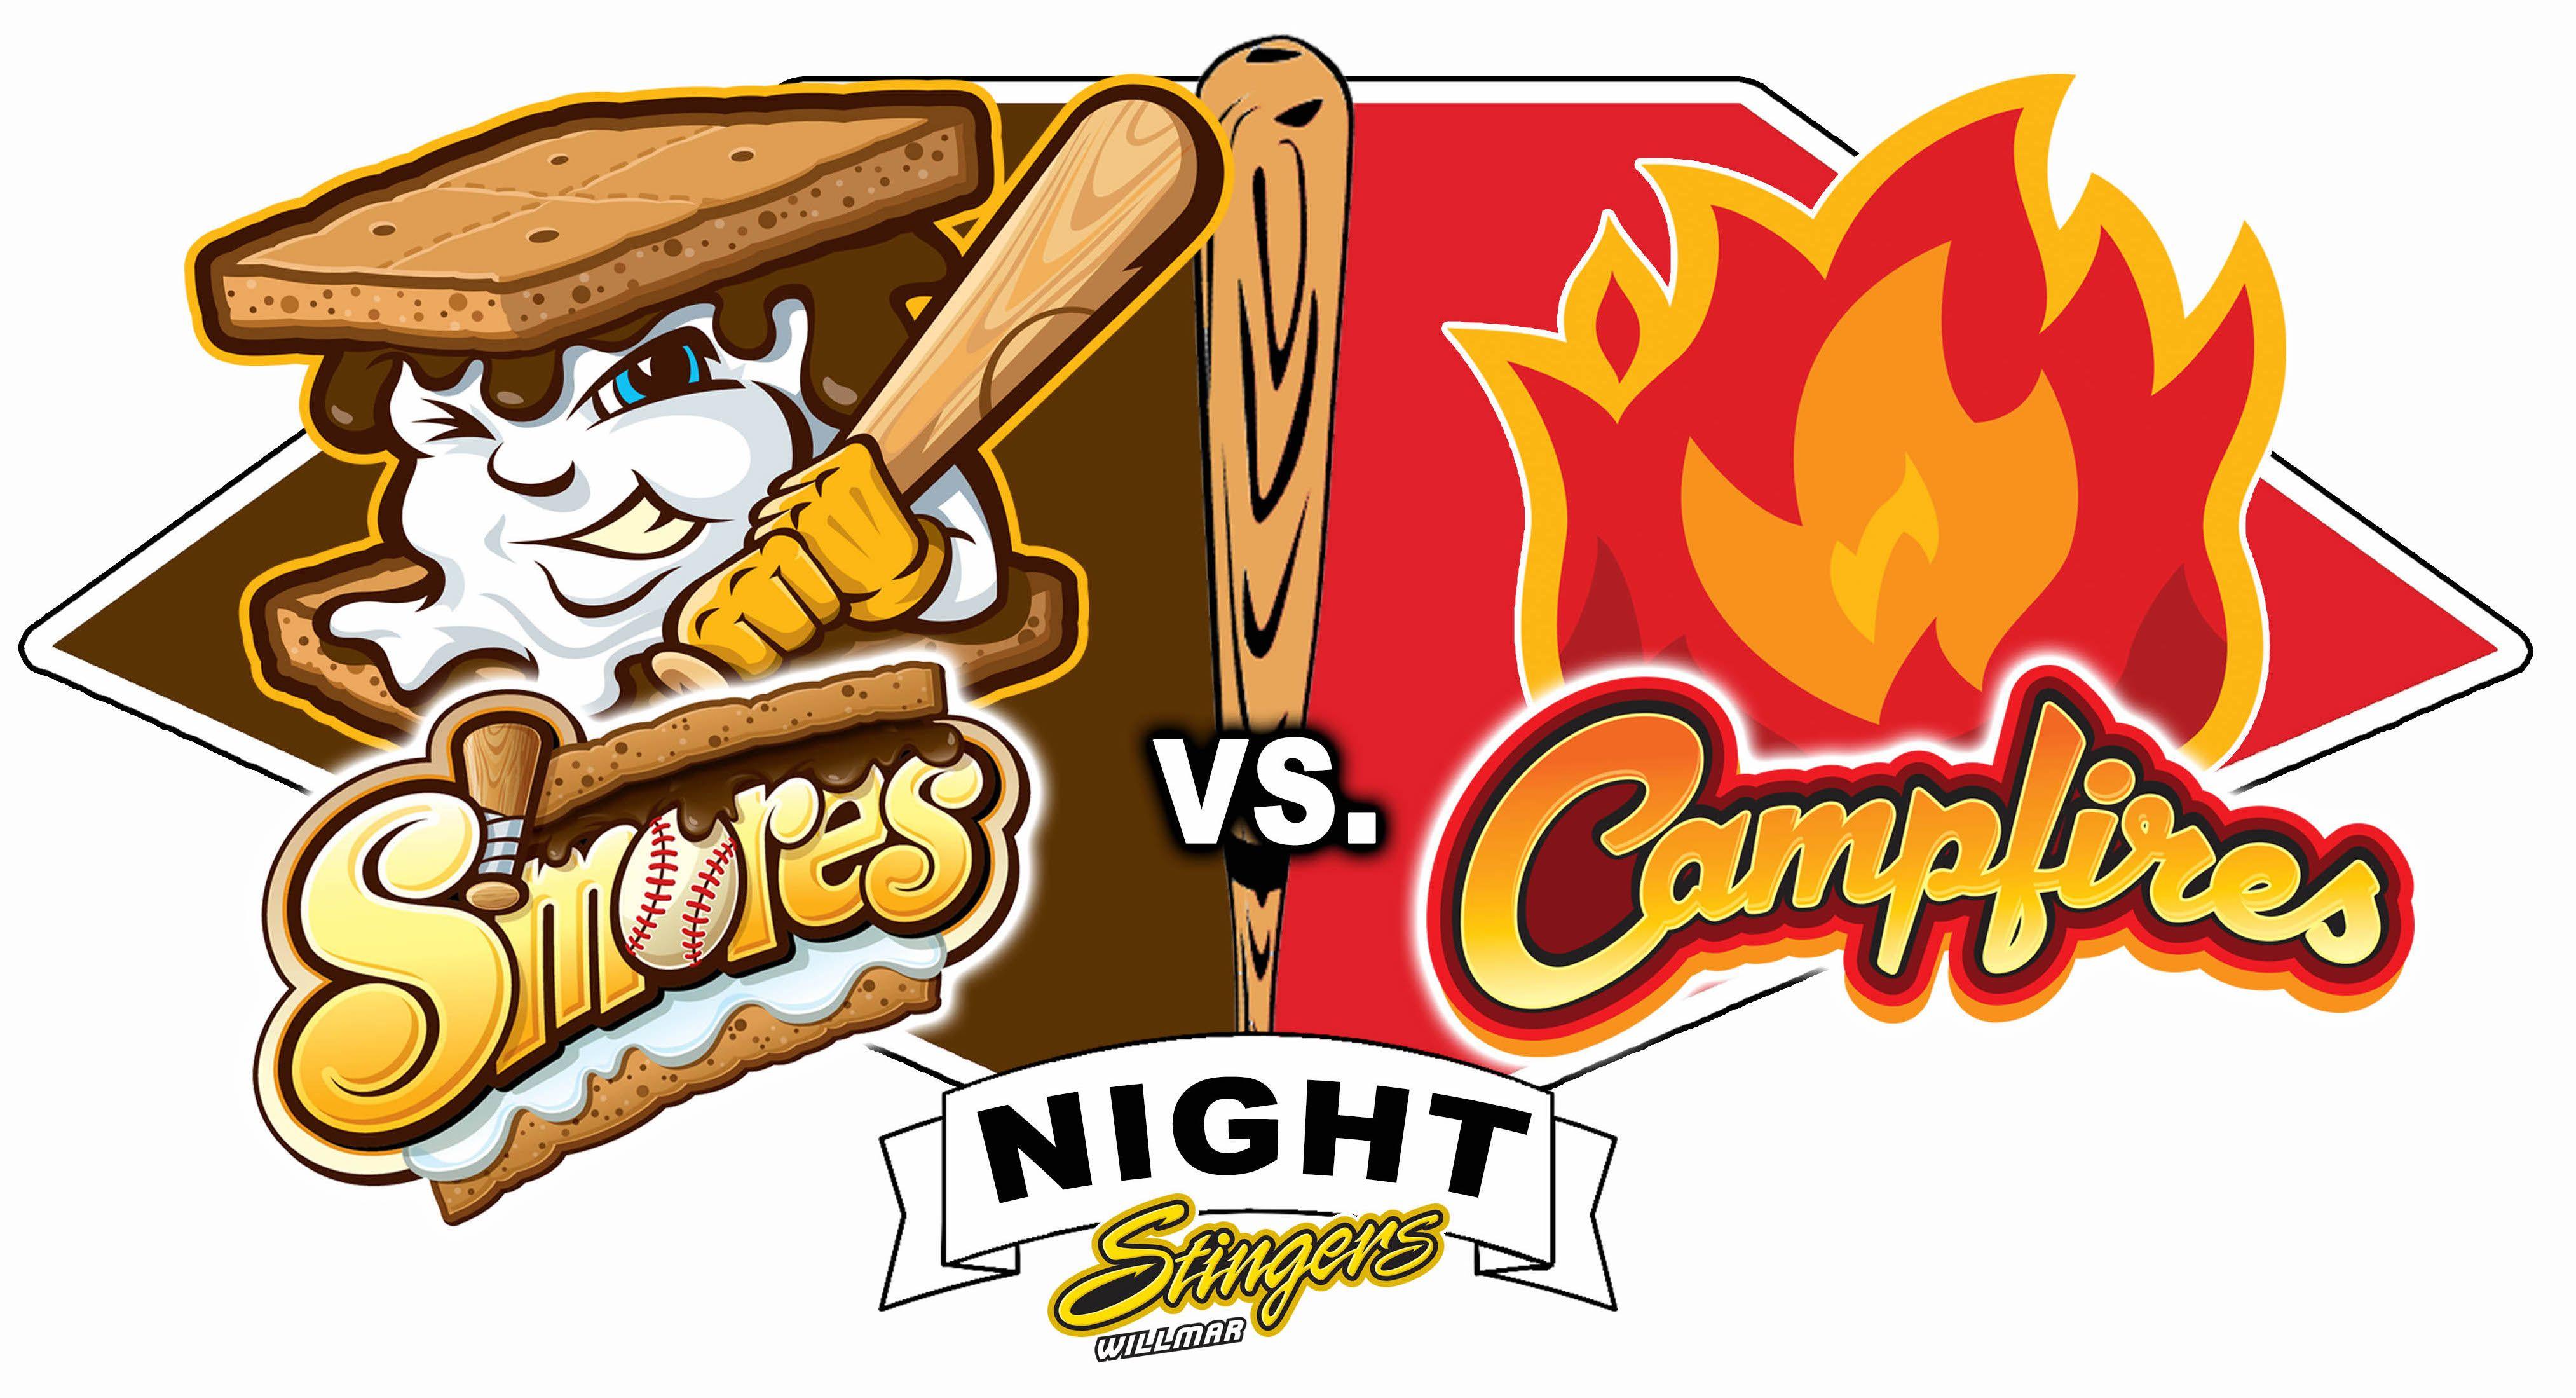 S'mores Logo - S'mores vs. Campfires Night! Stingers : Willmar Stingers